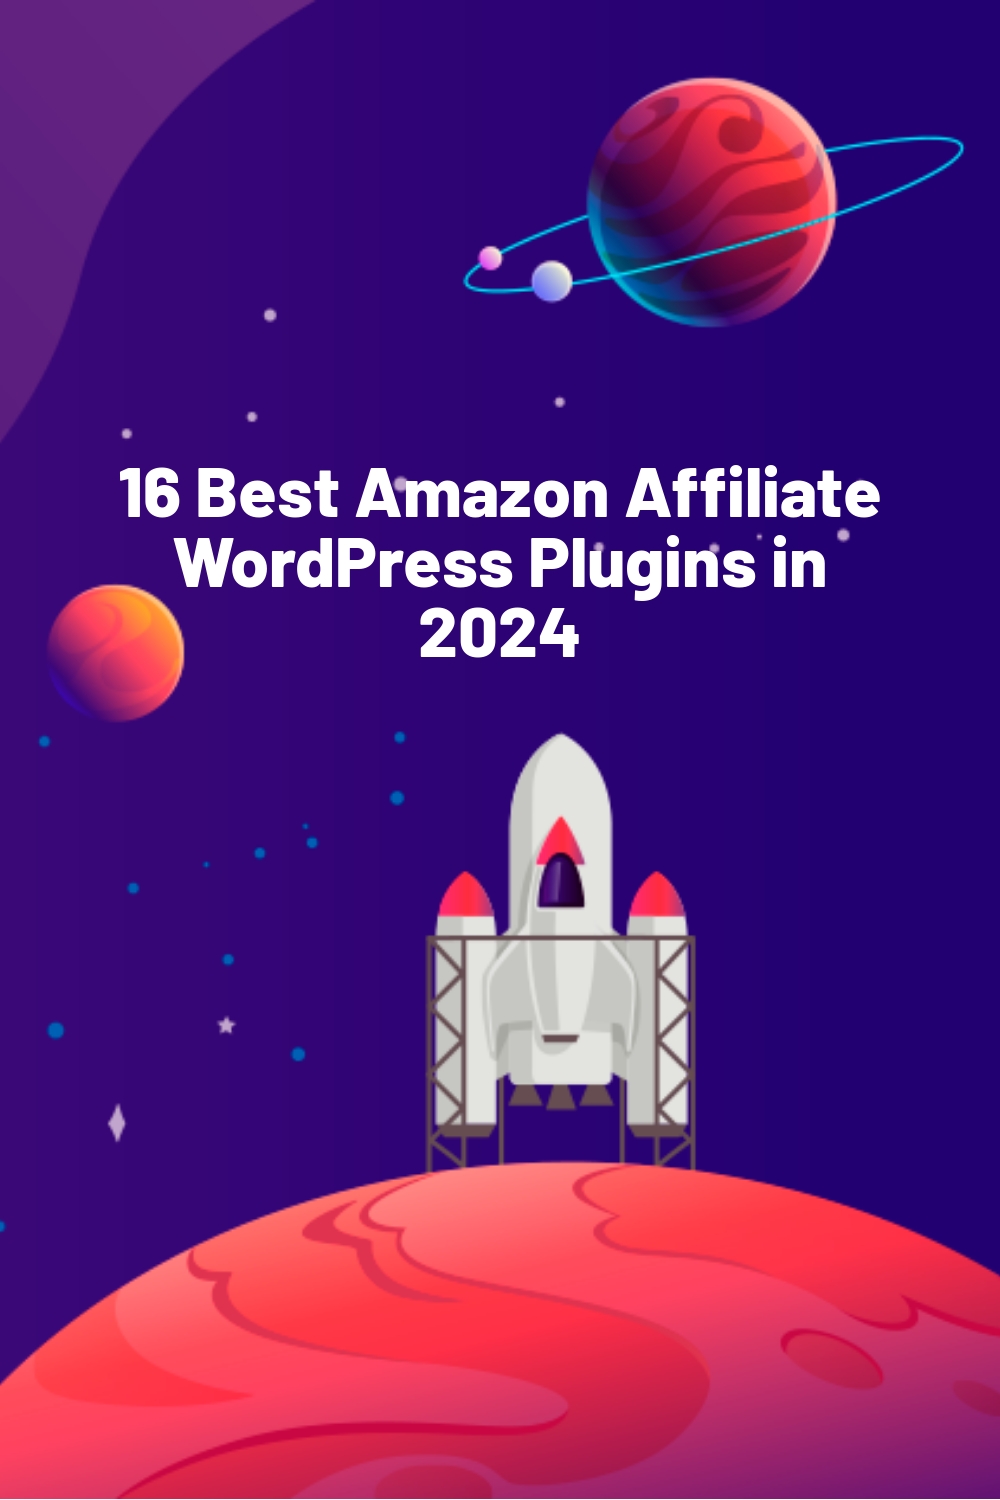 16 Best Amazon Affiliate WordPress Plugins in 2024